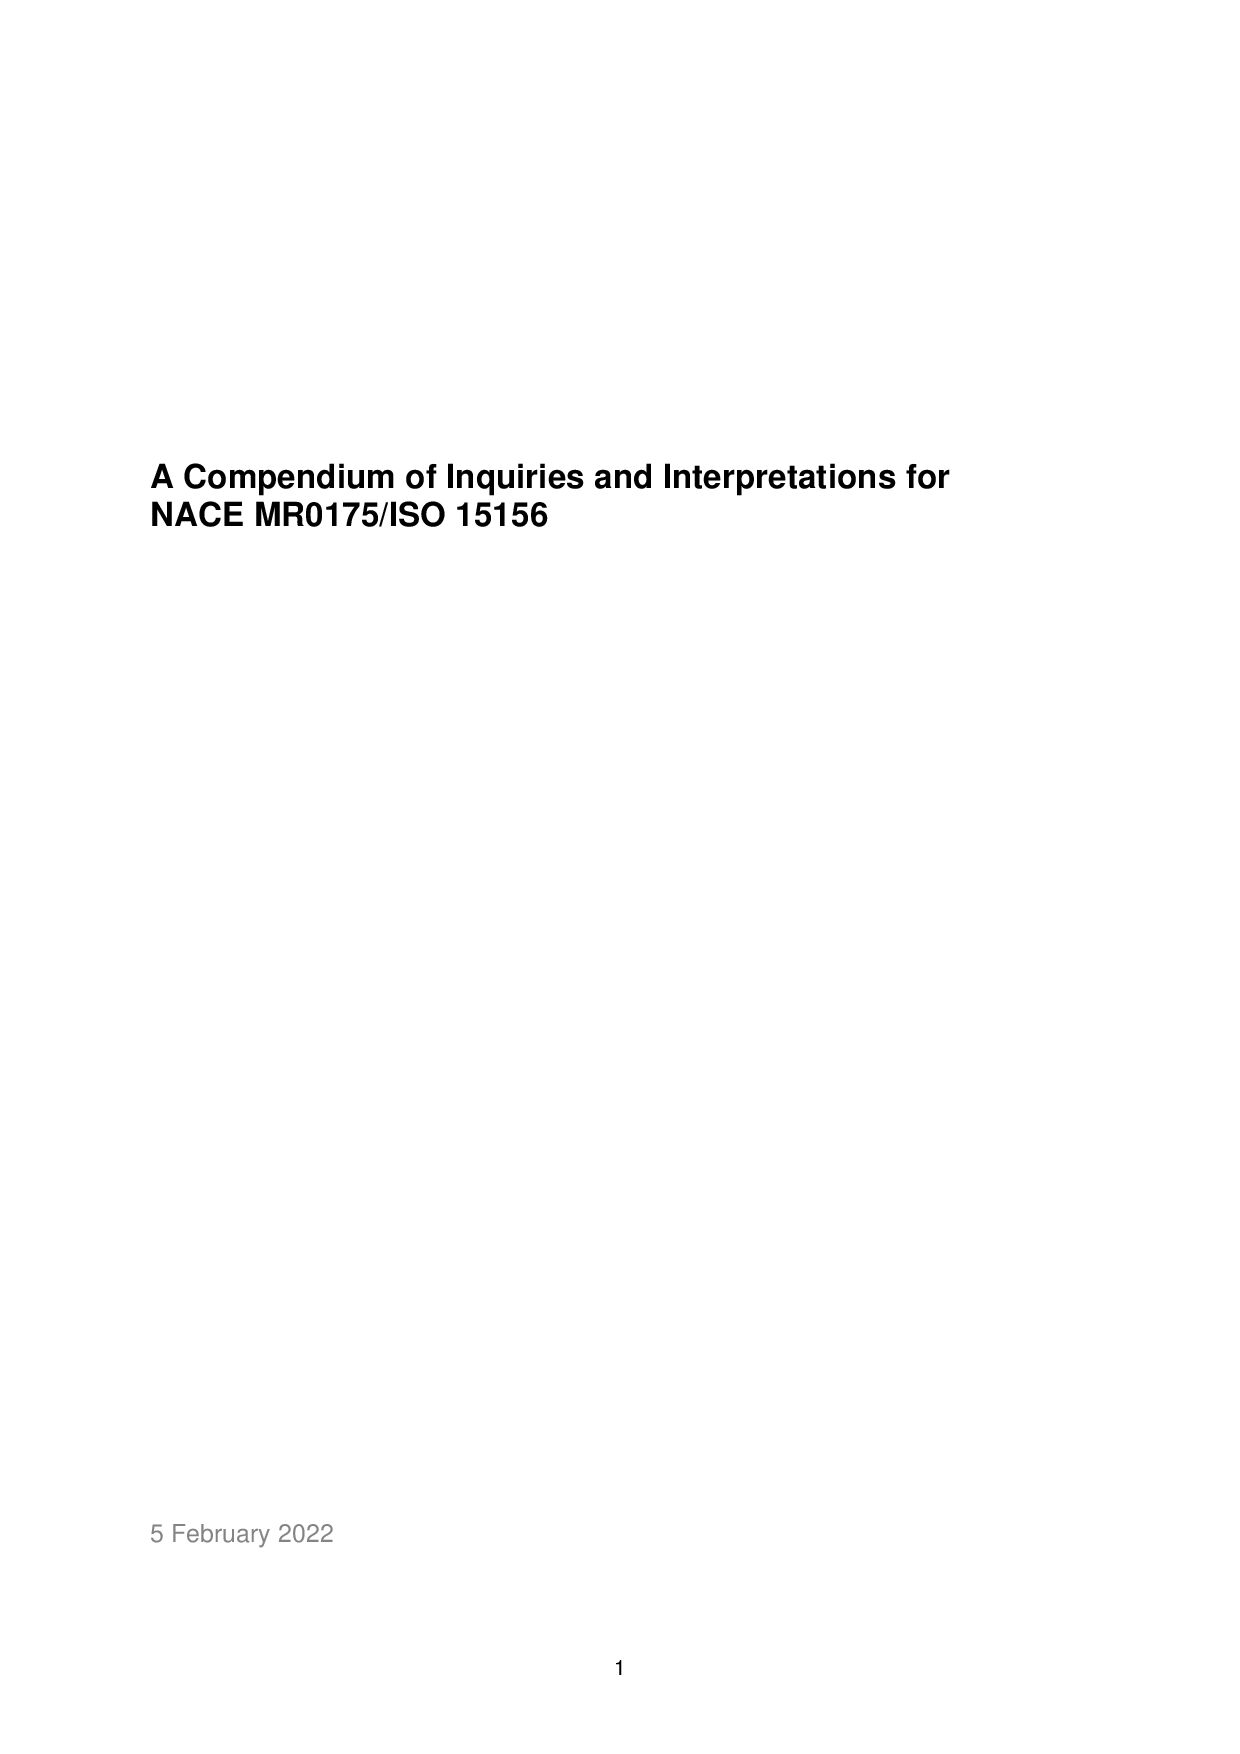 NACE MR0175 ISO 15156 Inquiries and Interpretations 2022封面图